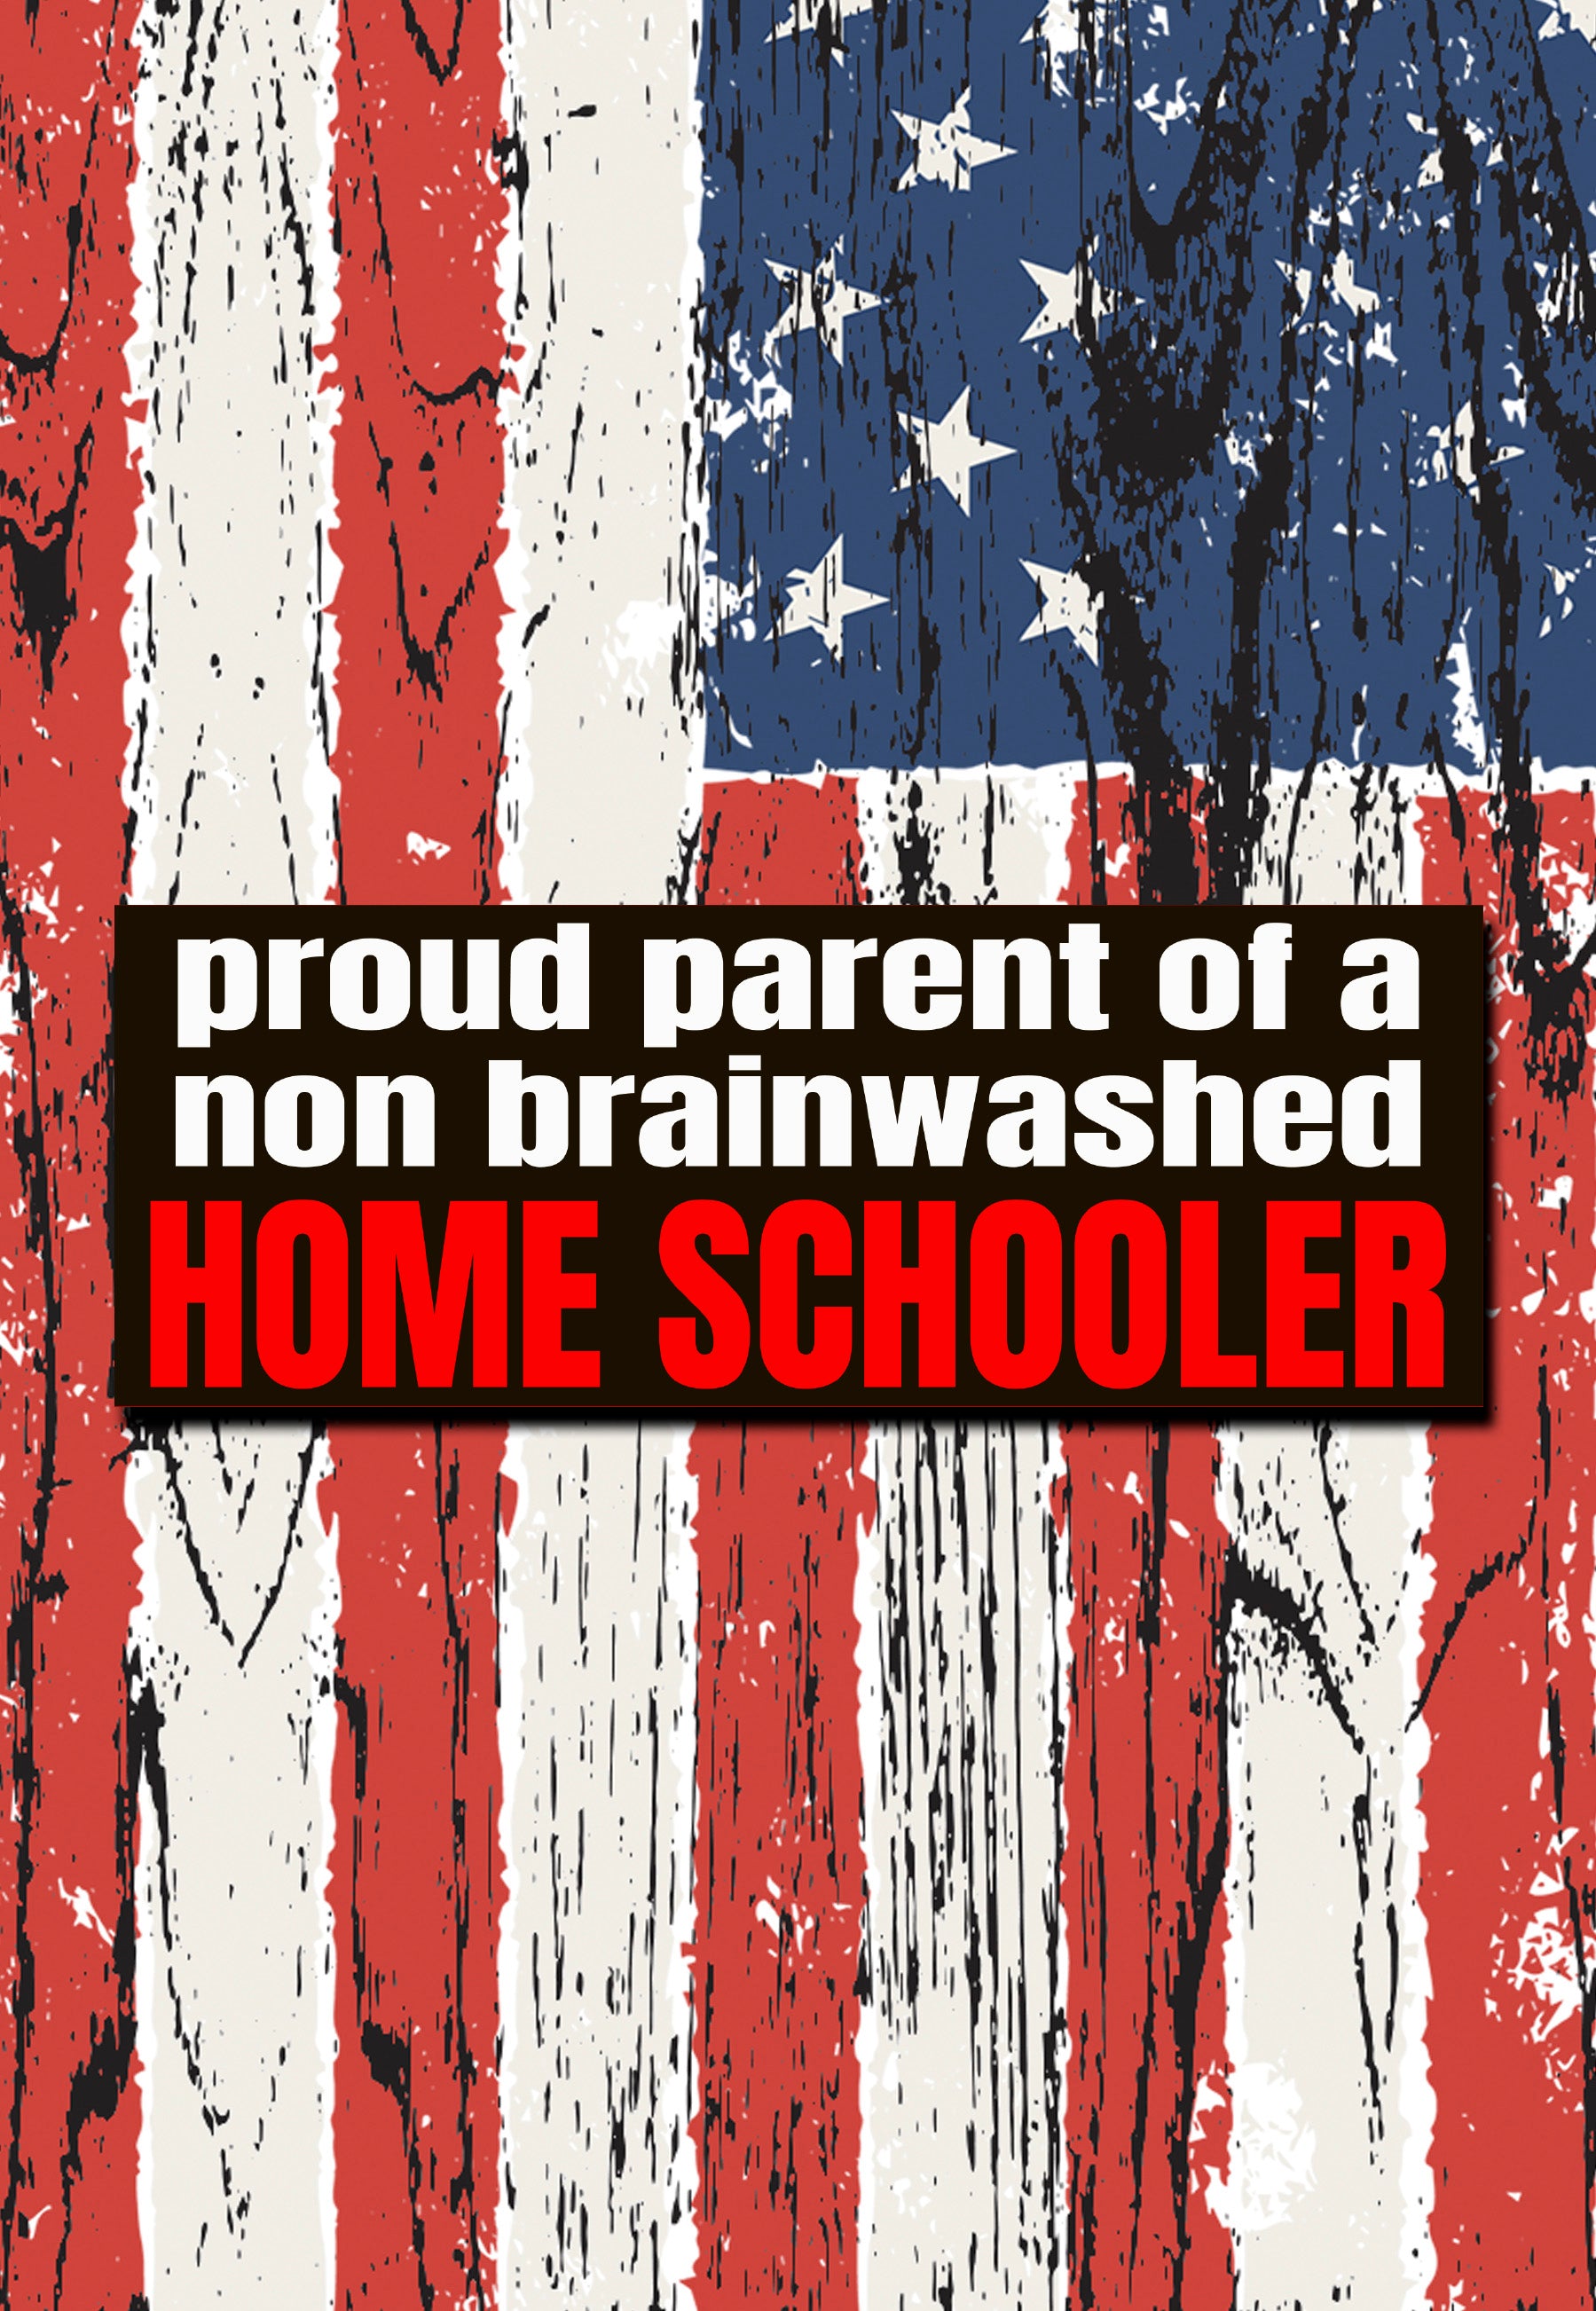 Non brainwashed home schooler bumper sticker